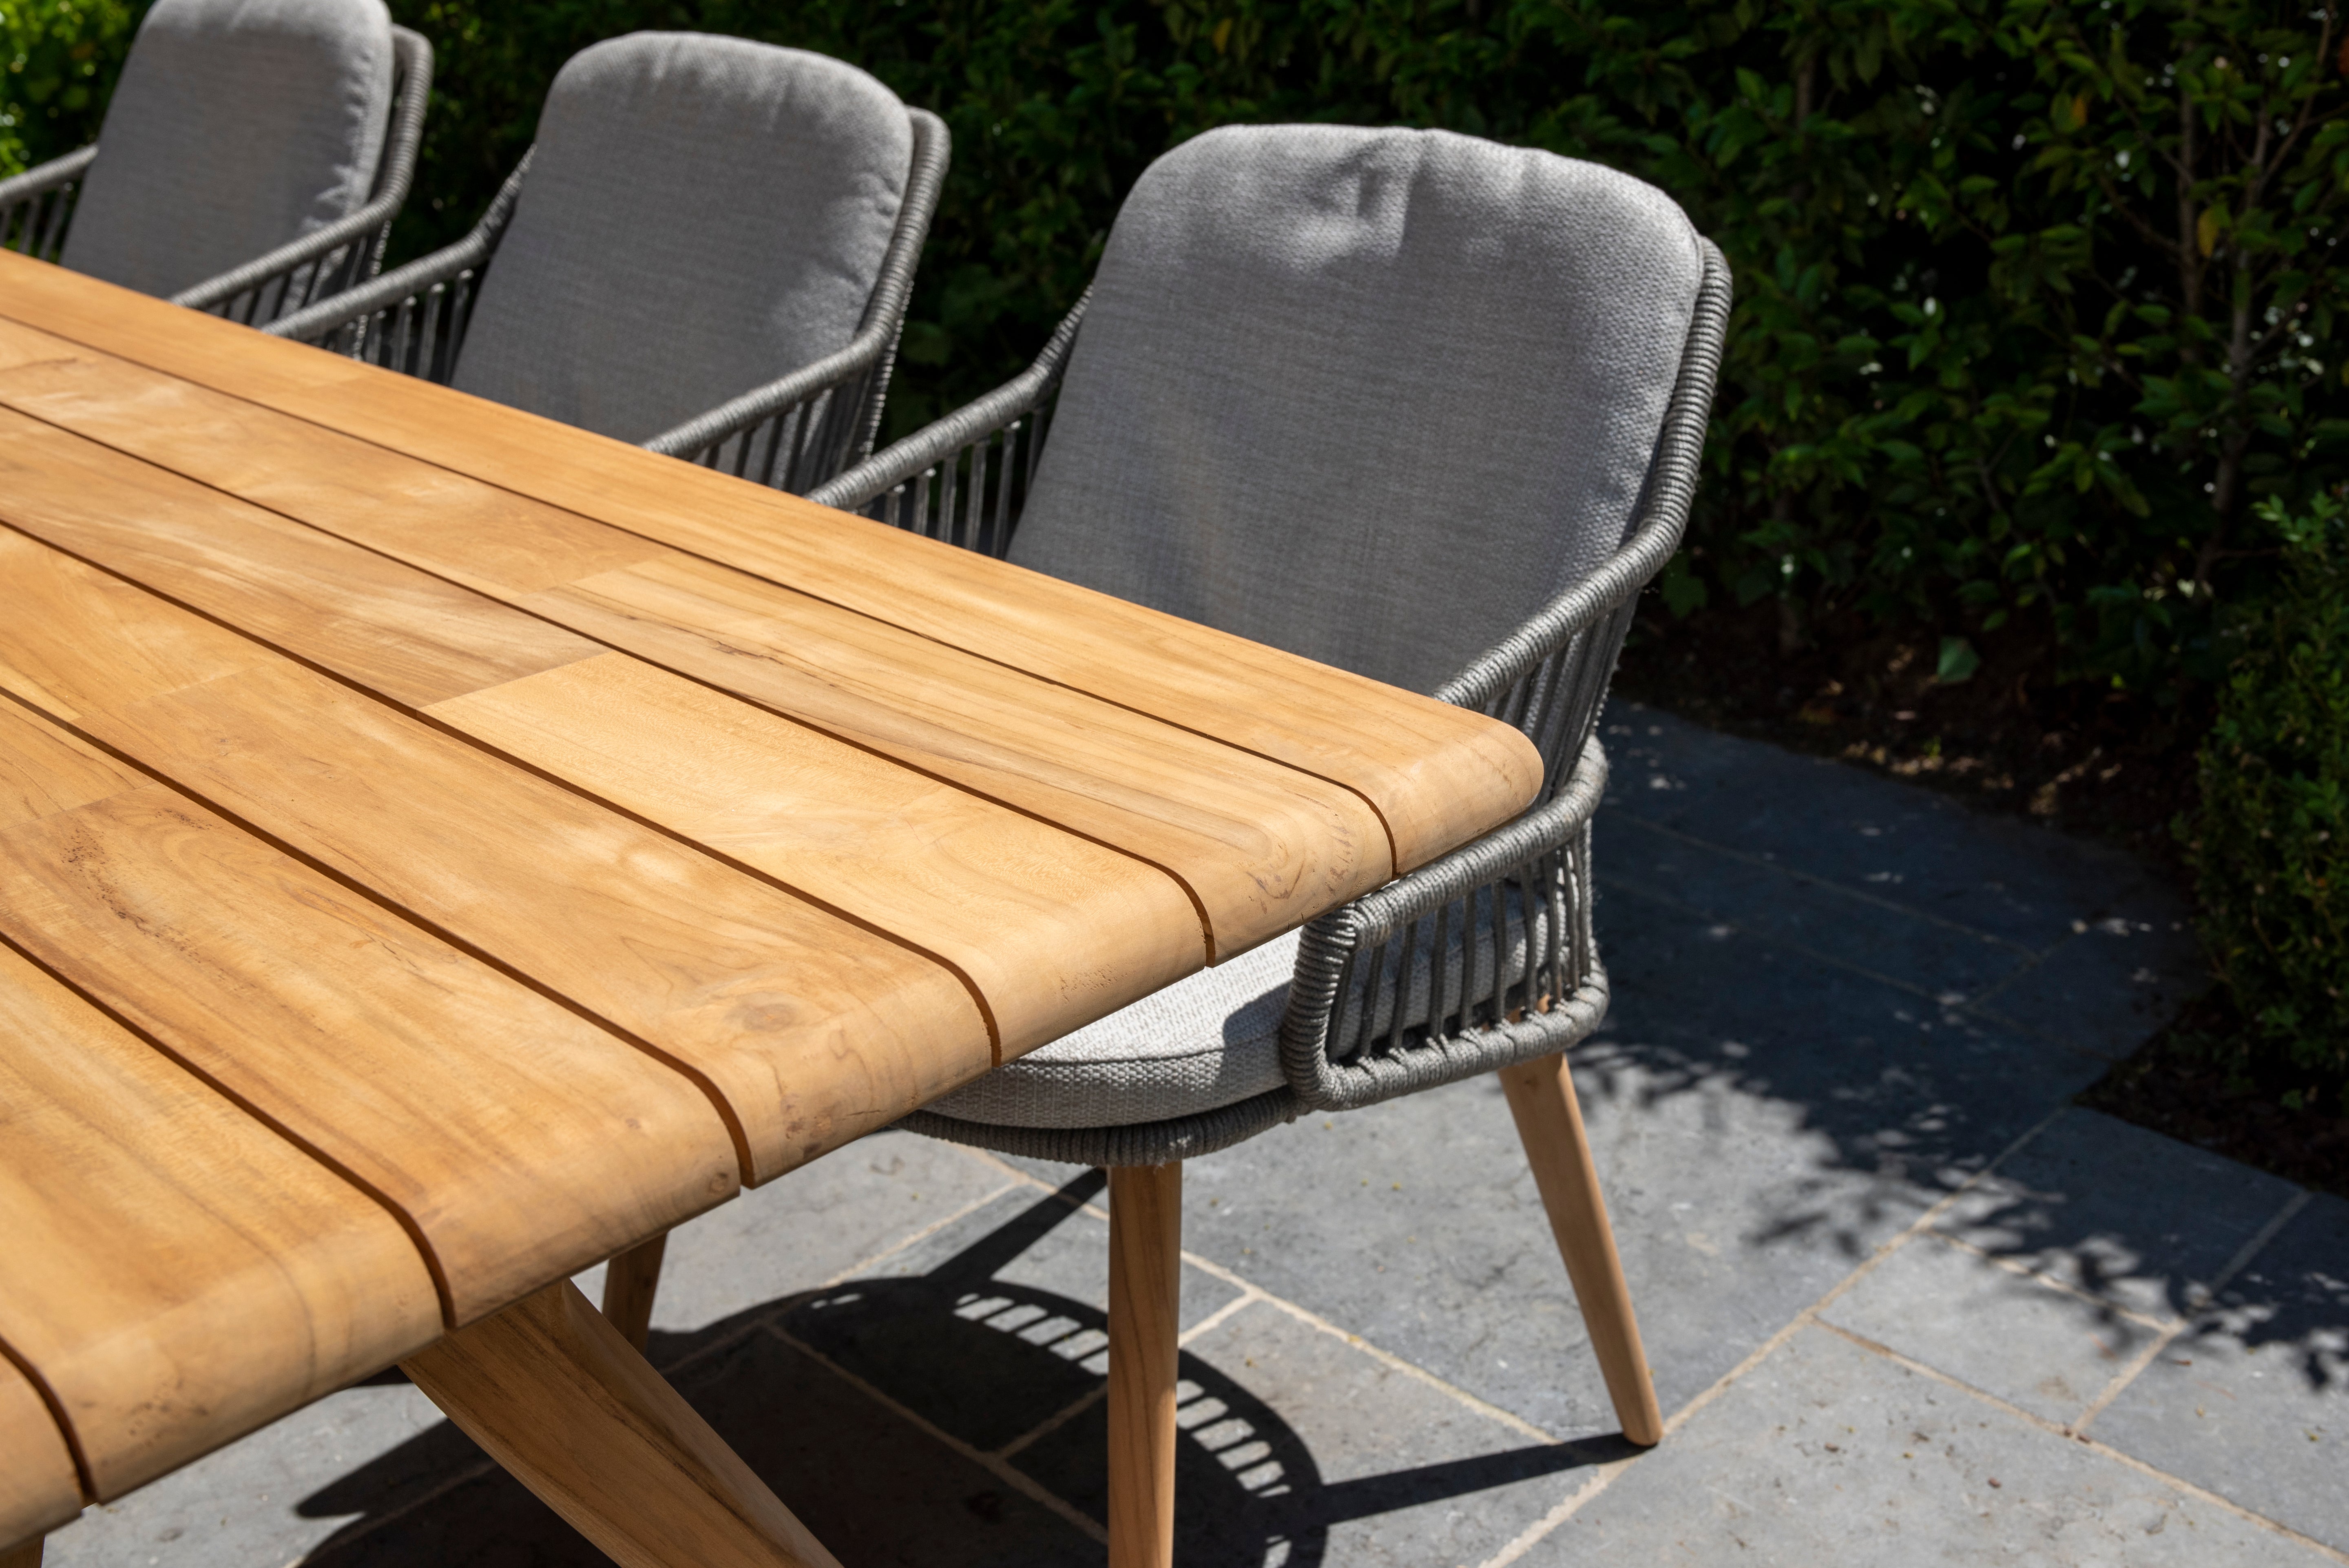 4 Seasons Outdoor Belair Dining Table Natural Teak 240 X 100 Cm